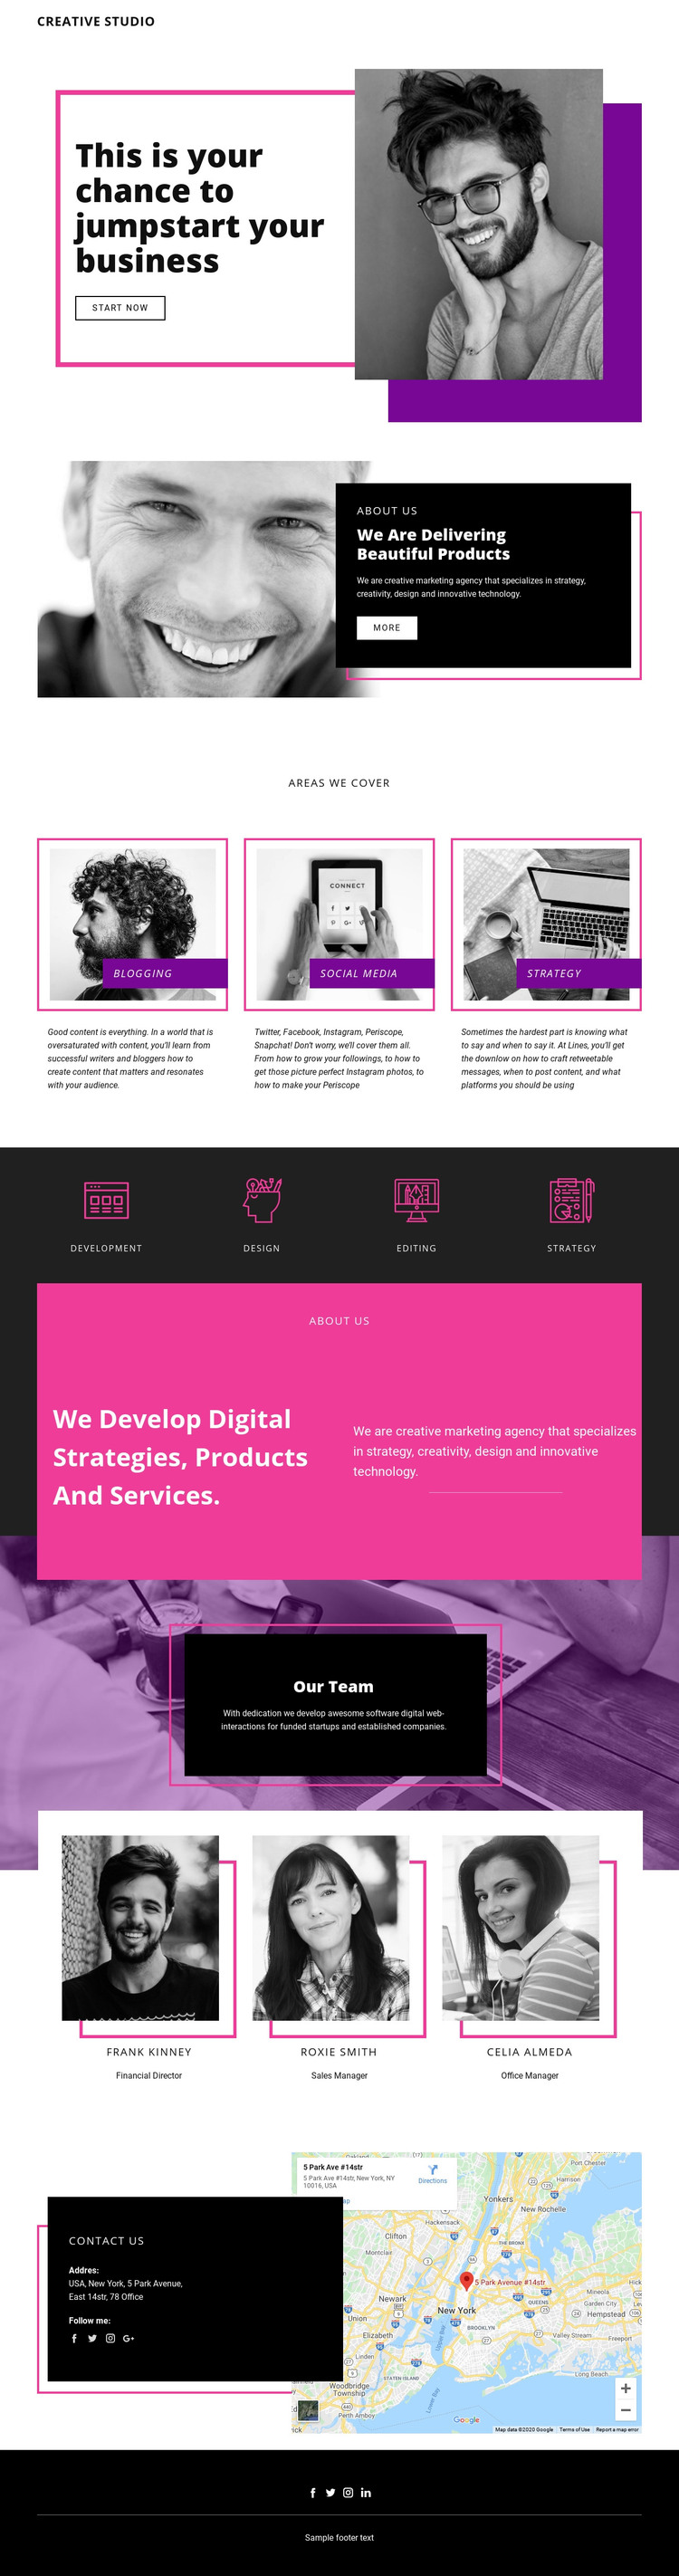 Digital Studio Homepage Design